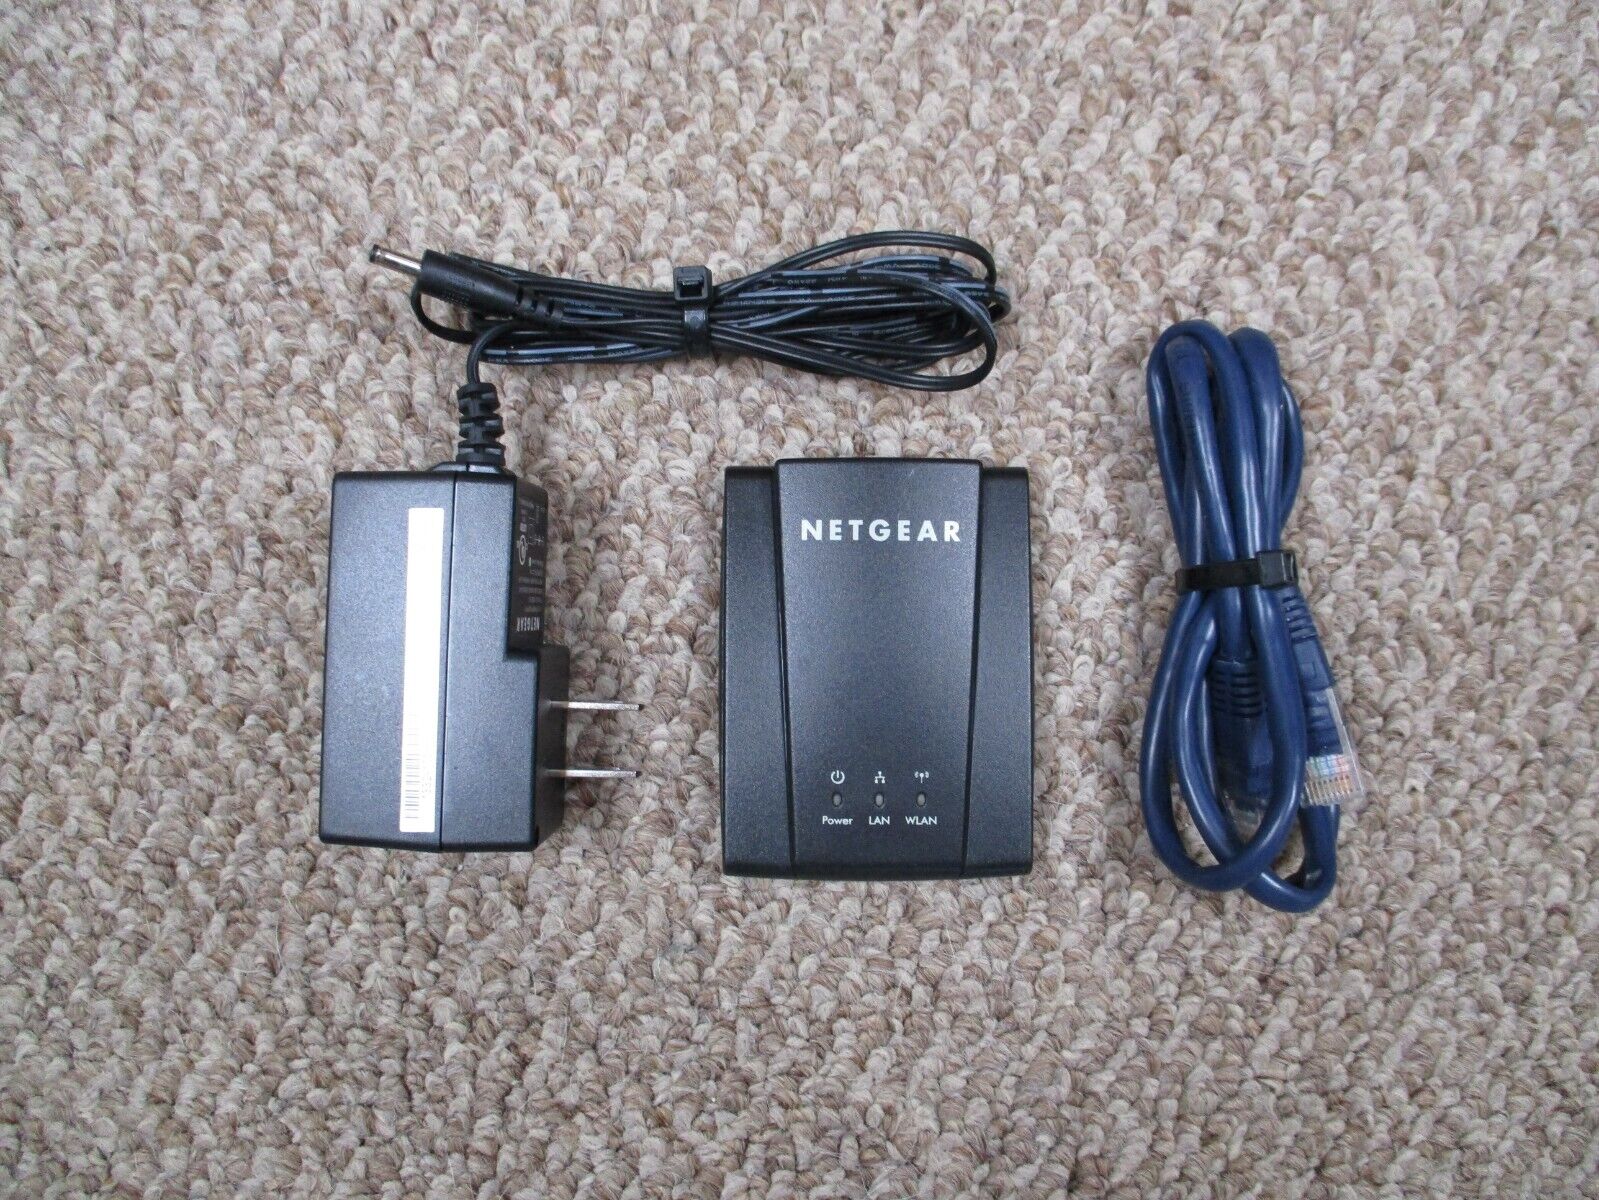 NETGEAR WNCE2001 Universal WiFi Internet Adapter for Smart TV/Blue-Ray Players